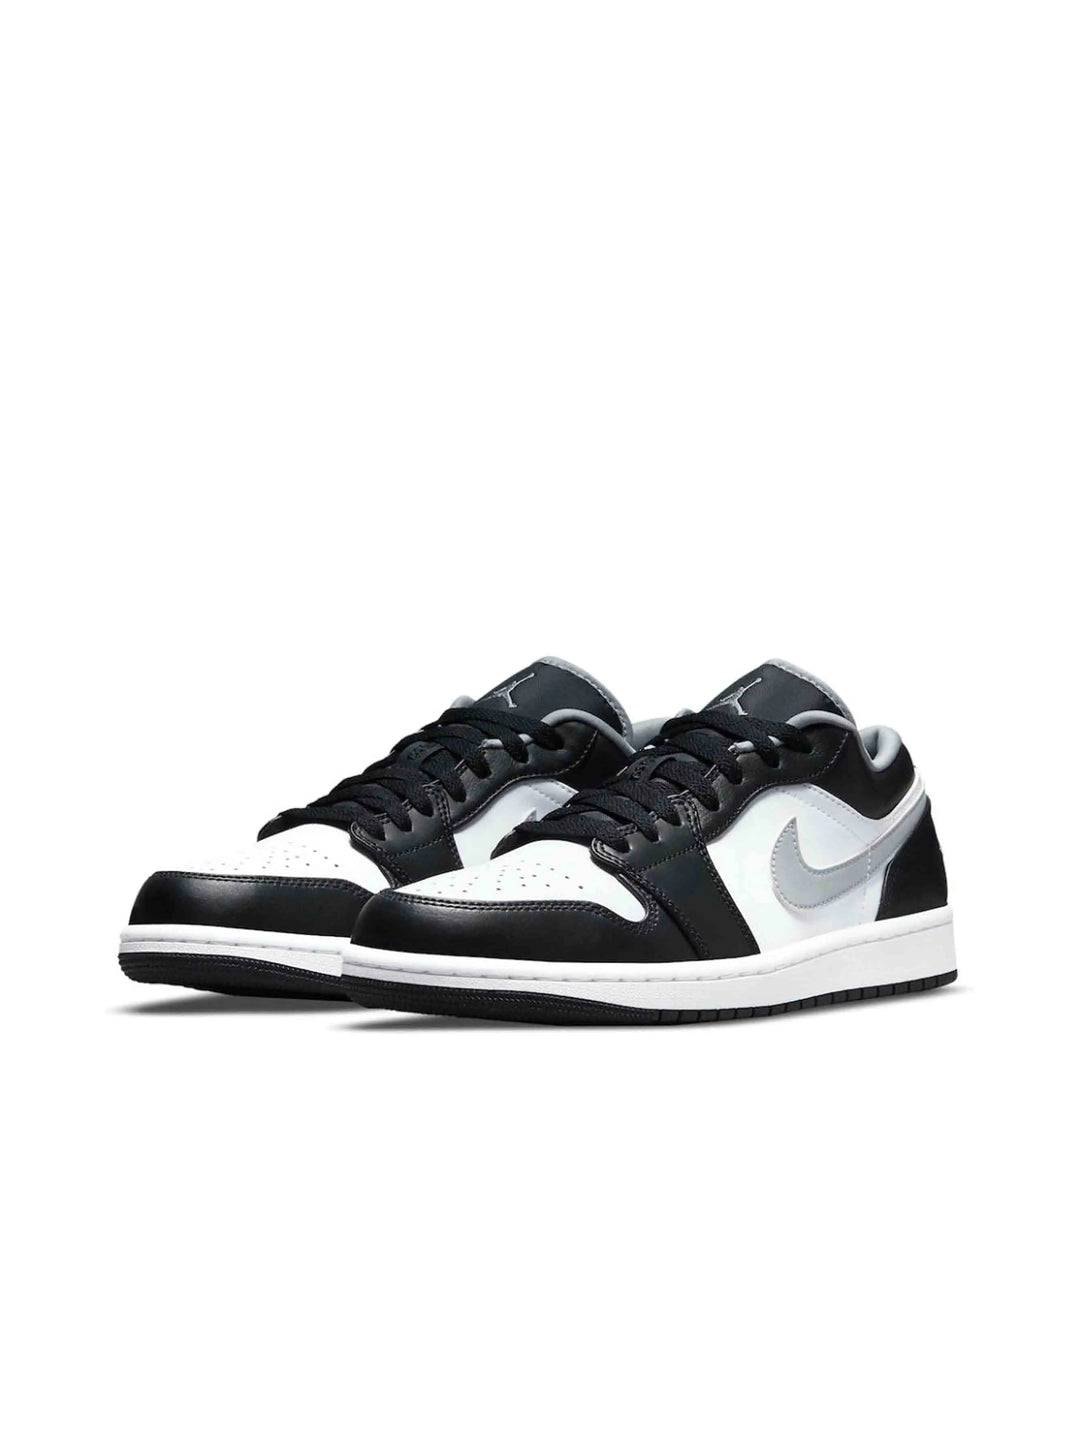 Nike Air Jordan 1 Low Black White Grey Prior